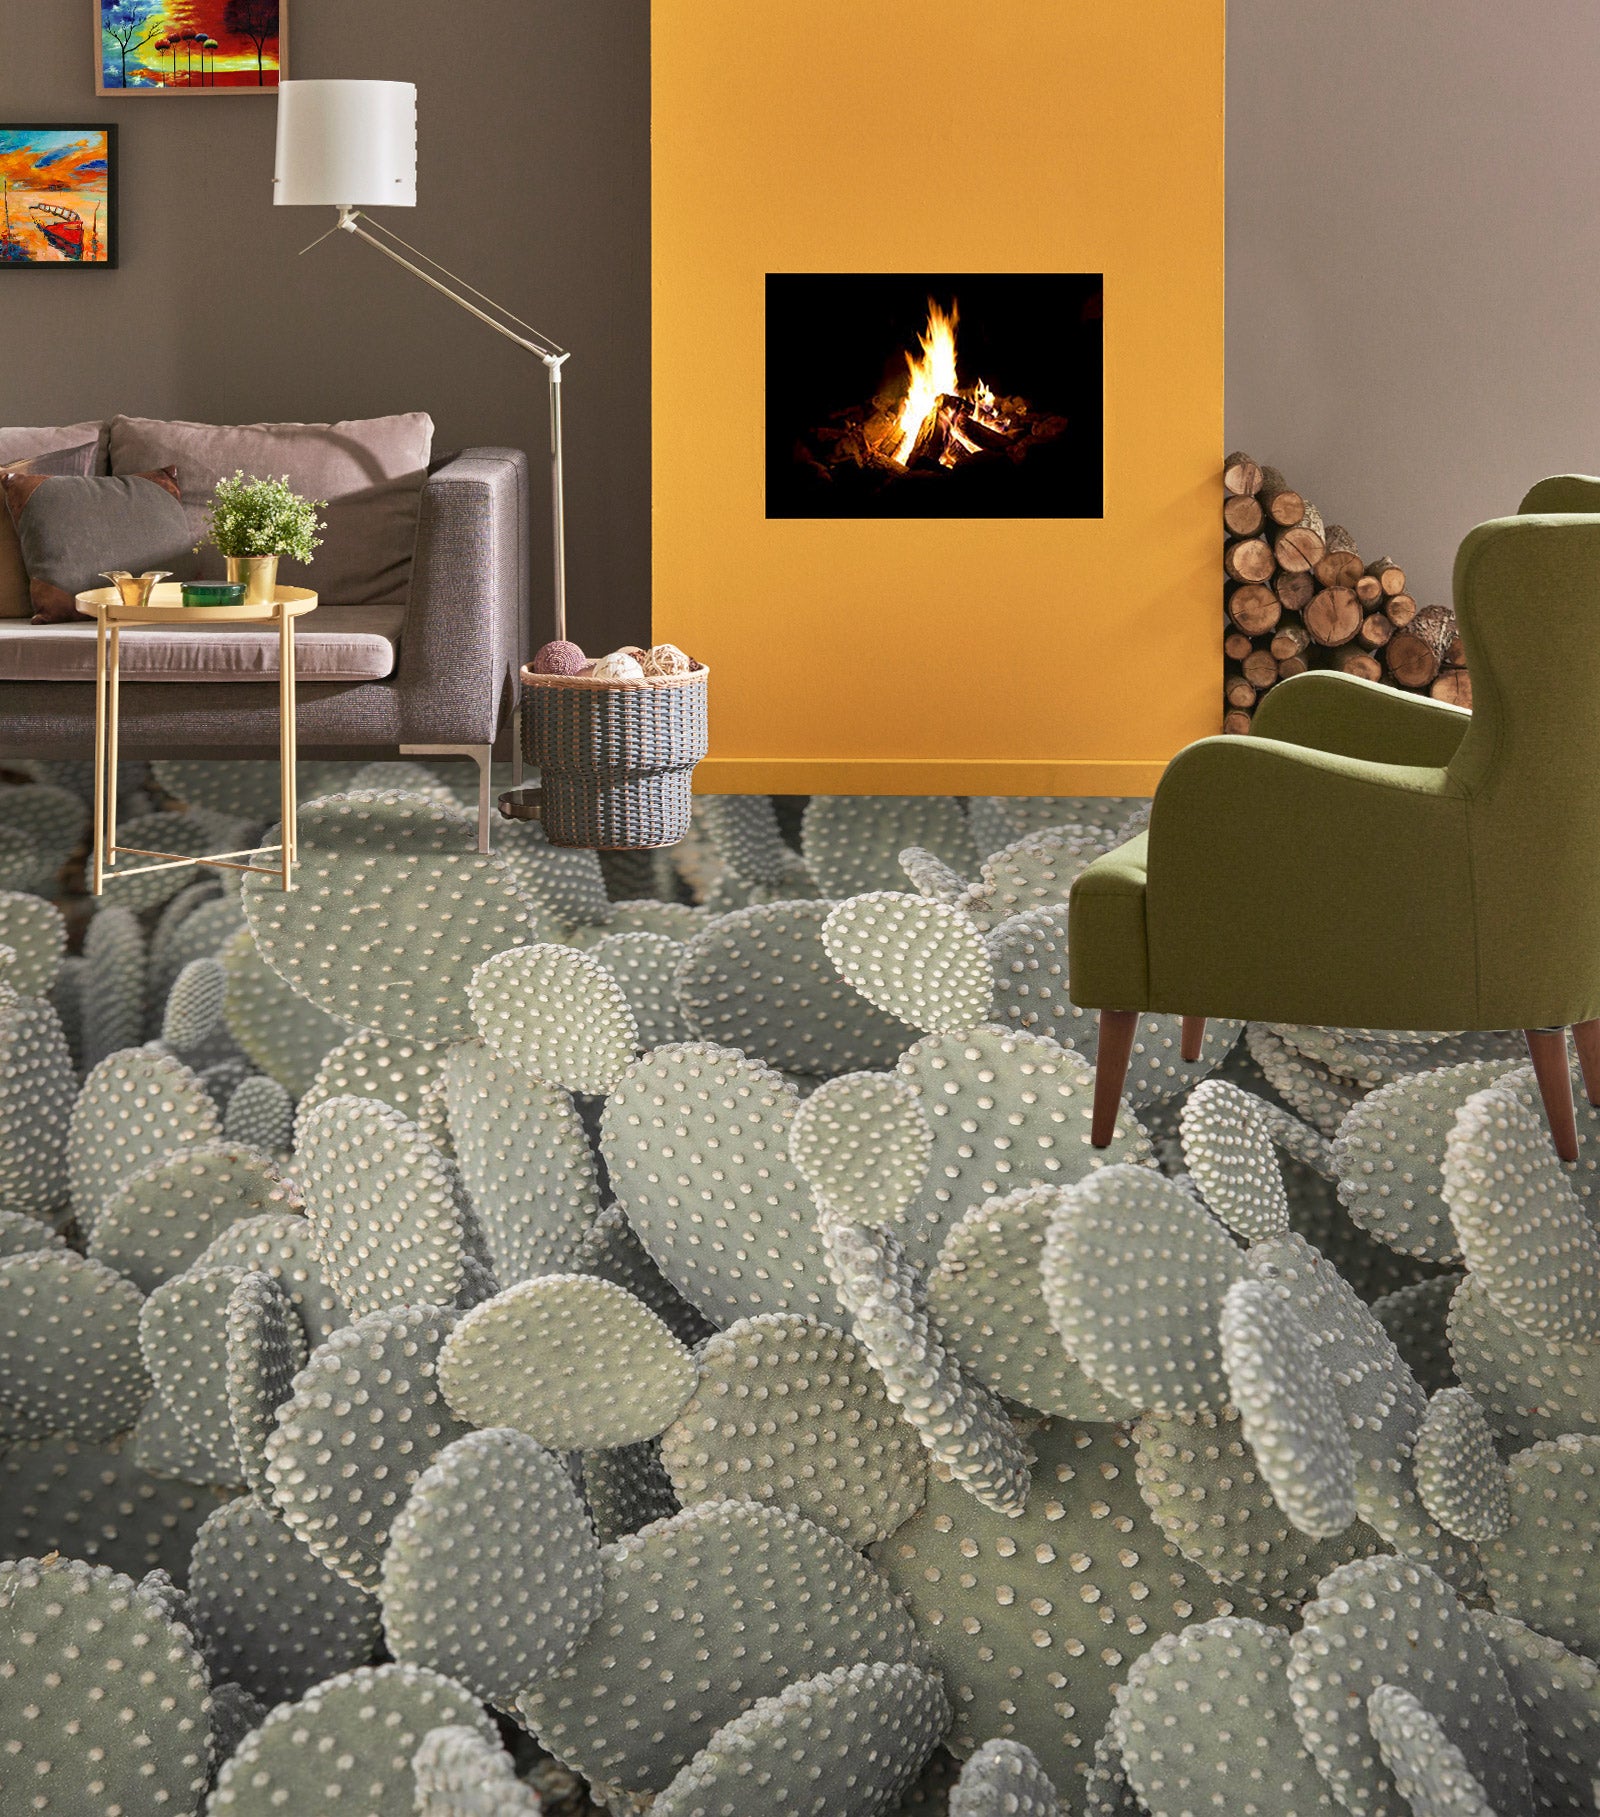 3D Cactus 9850 Assaf Frank Floor Mural  Wallpaper Murals Self-Adhesive Removable Print Epoxy